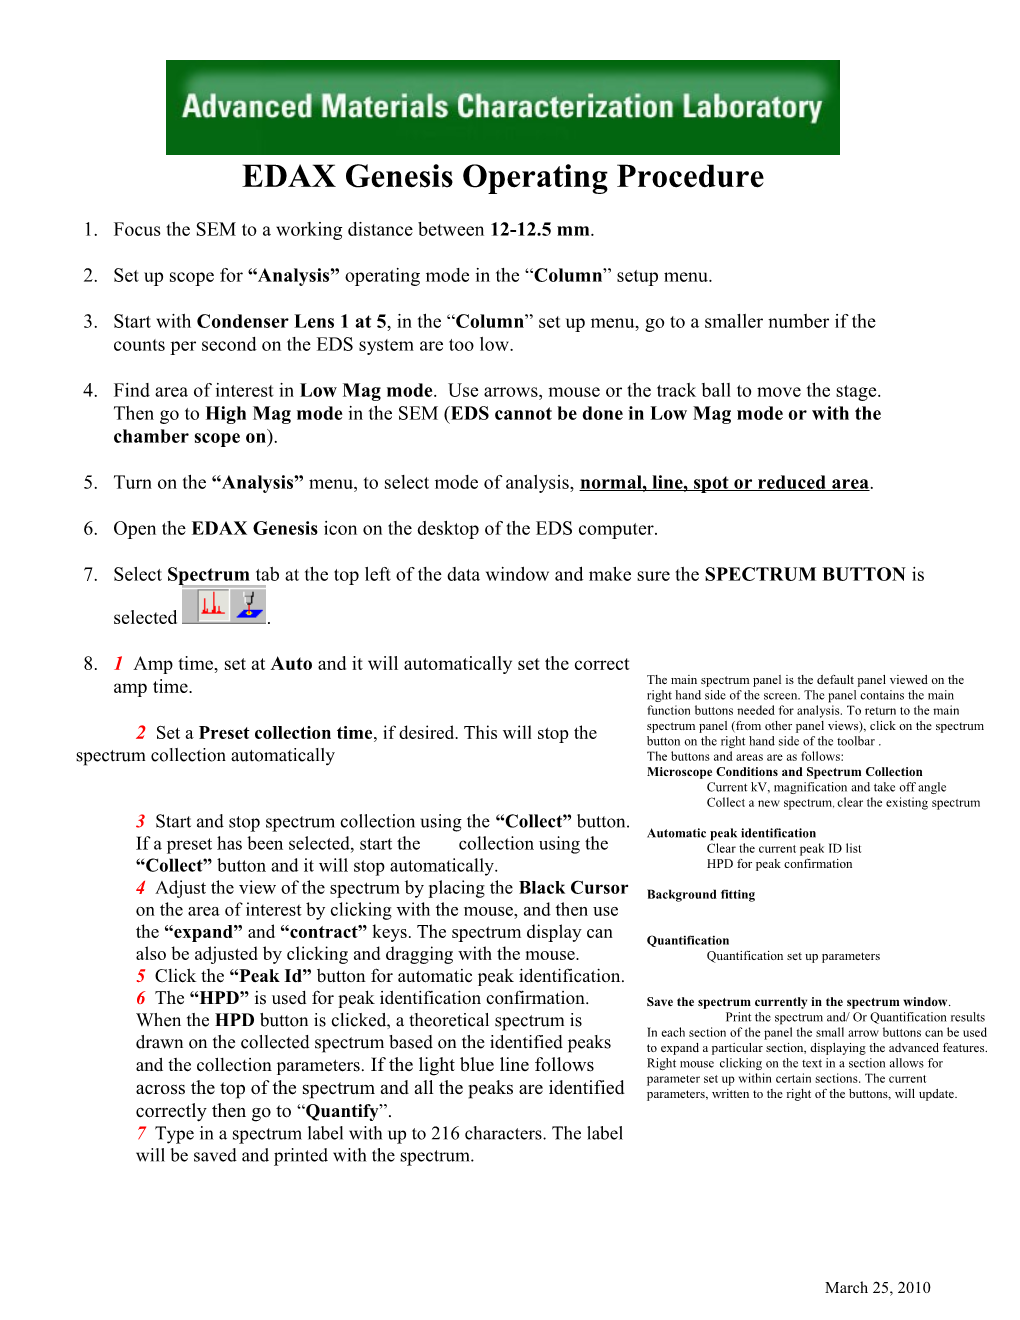 EDAX Genesis Operating Procedure